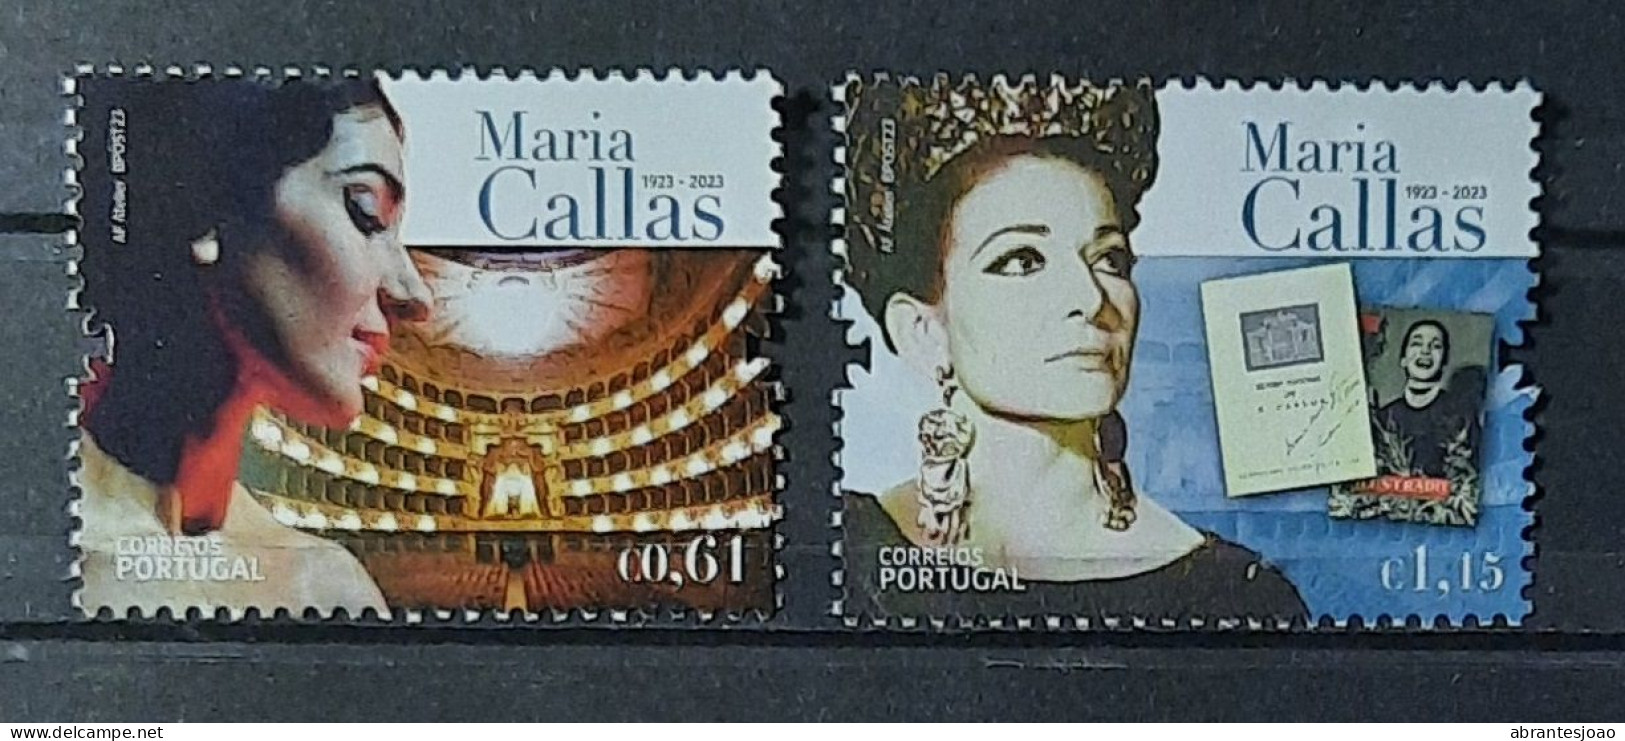 2023 - Portugal - MNH - Centenary Of Maria Callas - Opera Diva - 2 Stamps - Ongebruikt